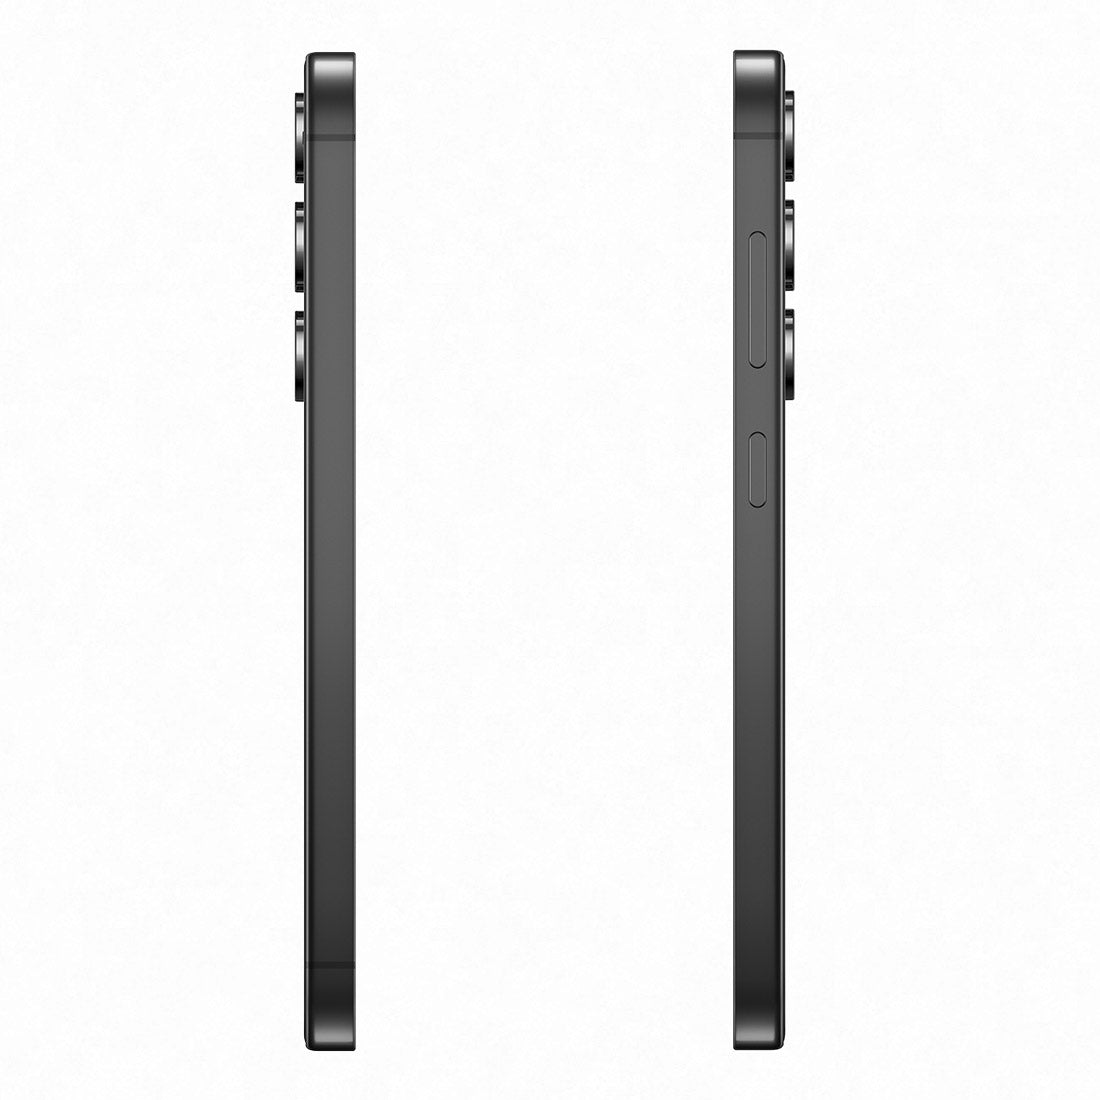 Samsung Galaxy S24 5G Dual Sim, 256GB/8GB, 6.2'' - Onyx Black